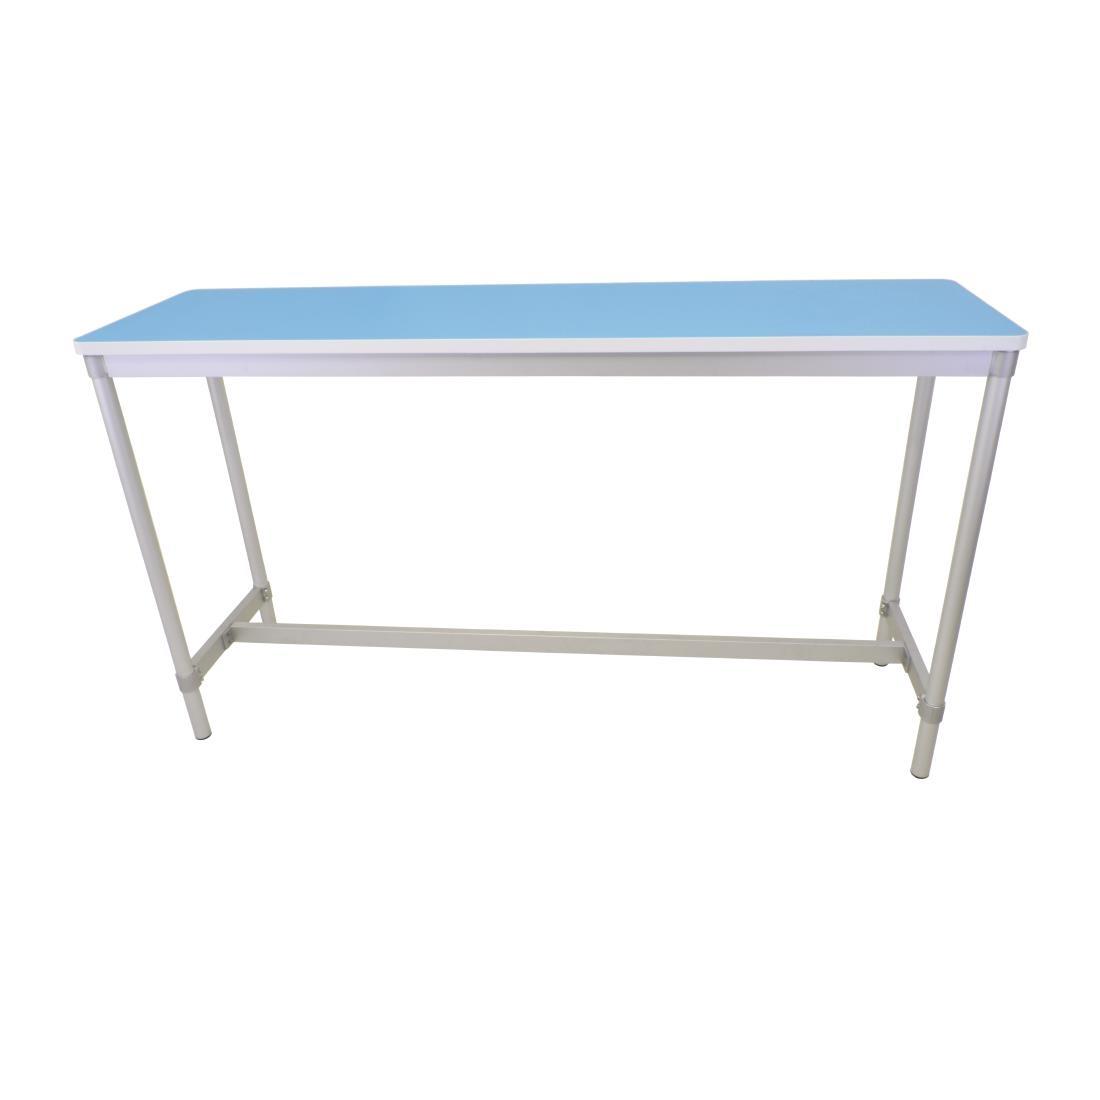 Gopak Enviro Indoor Pastel Blue Rectangle Poseur Table 1200mm - DG131-PB  - 3